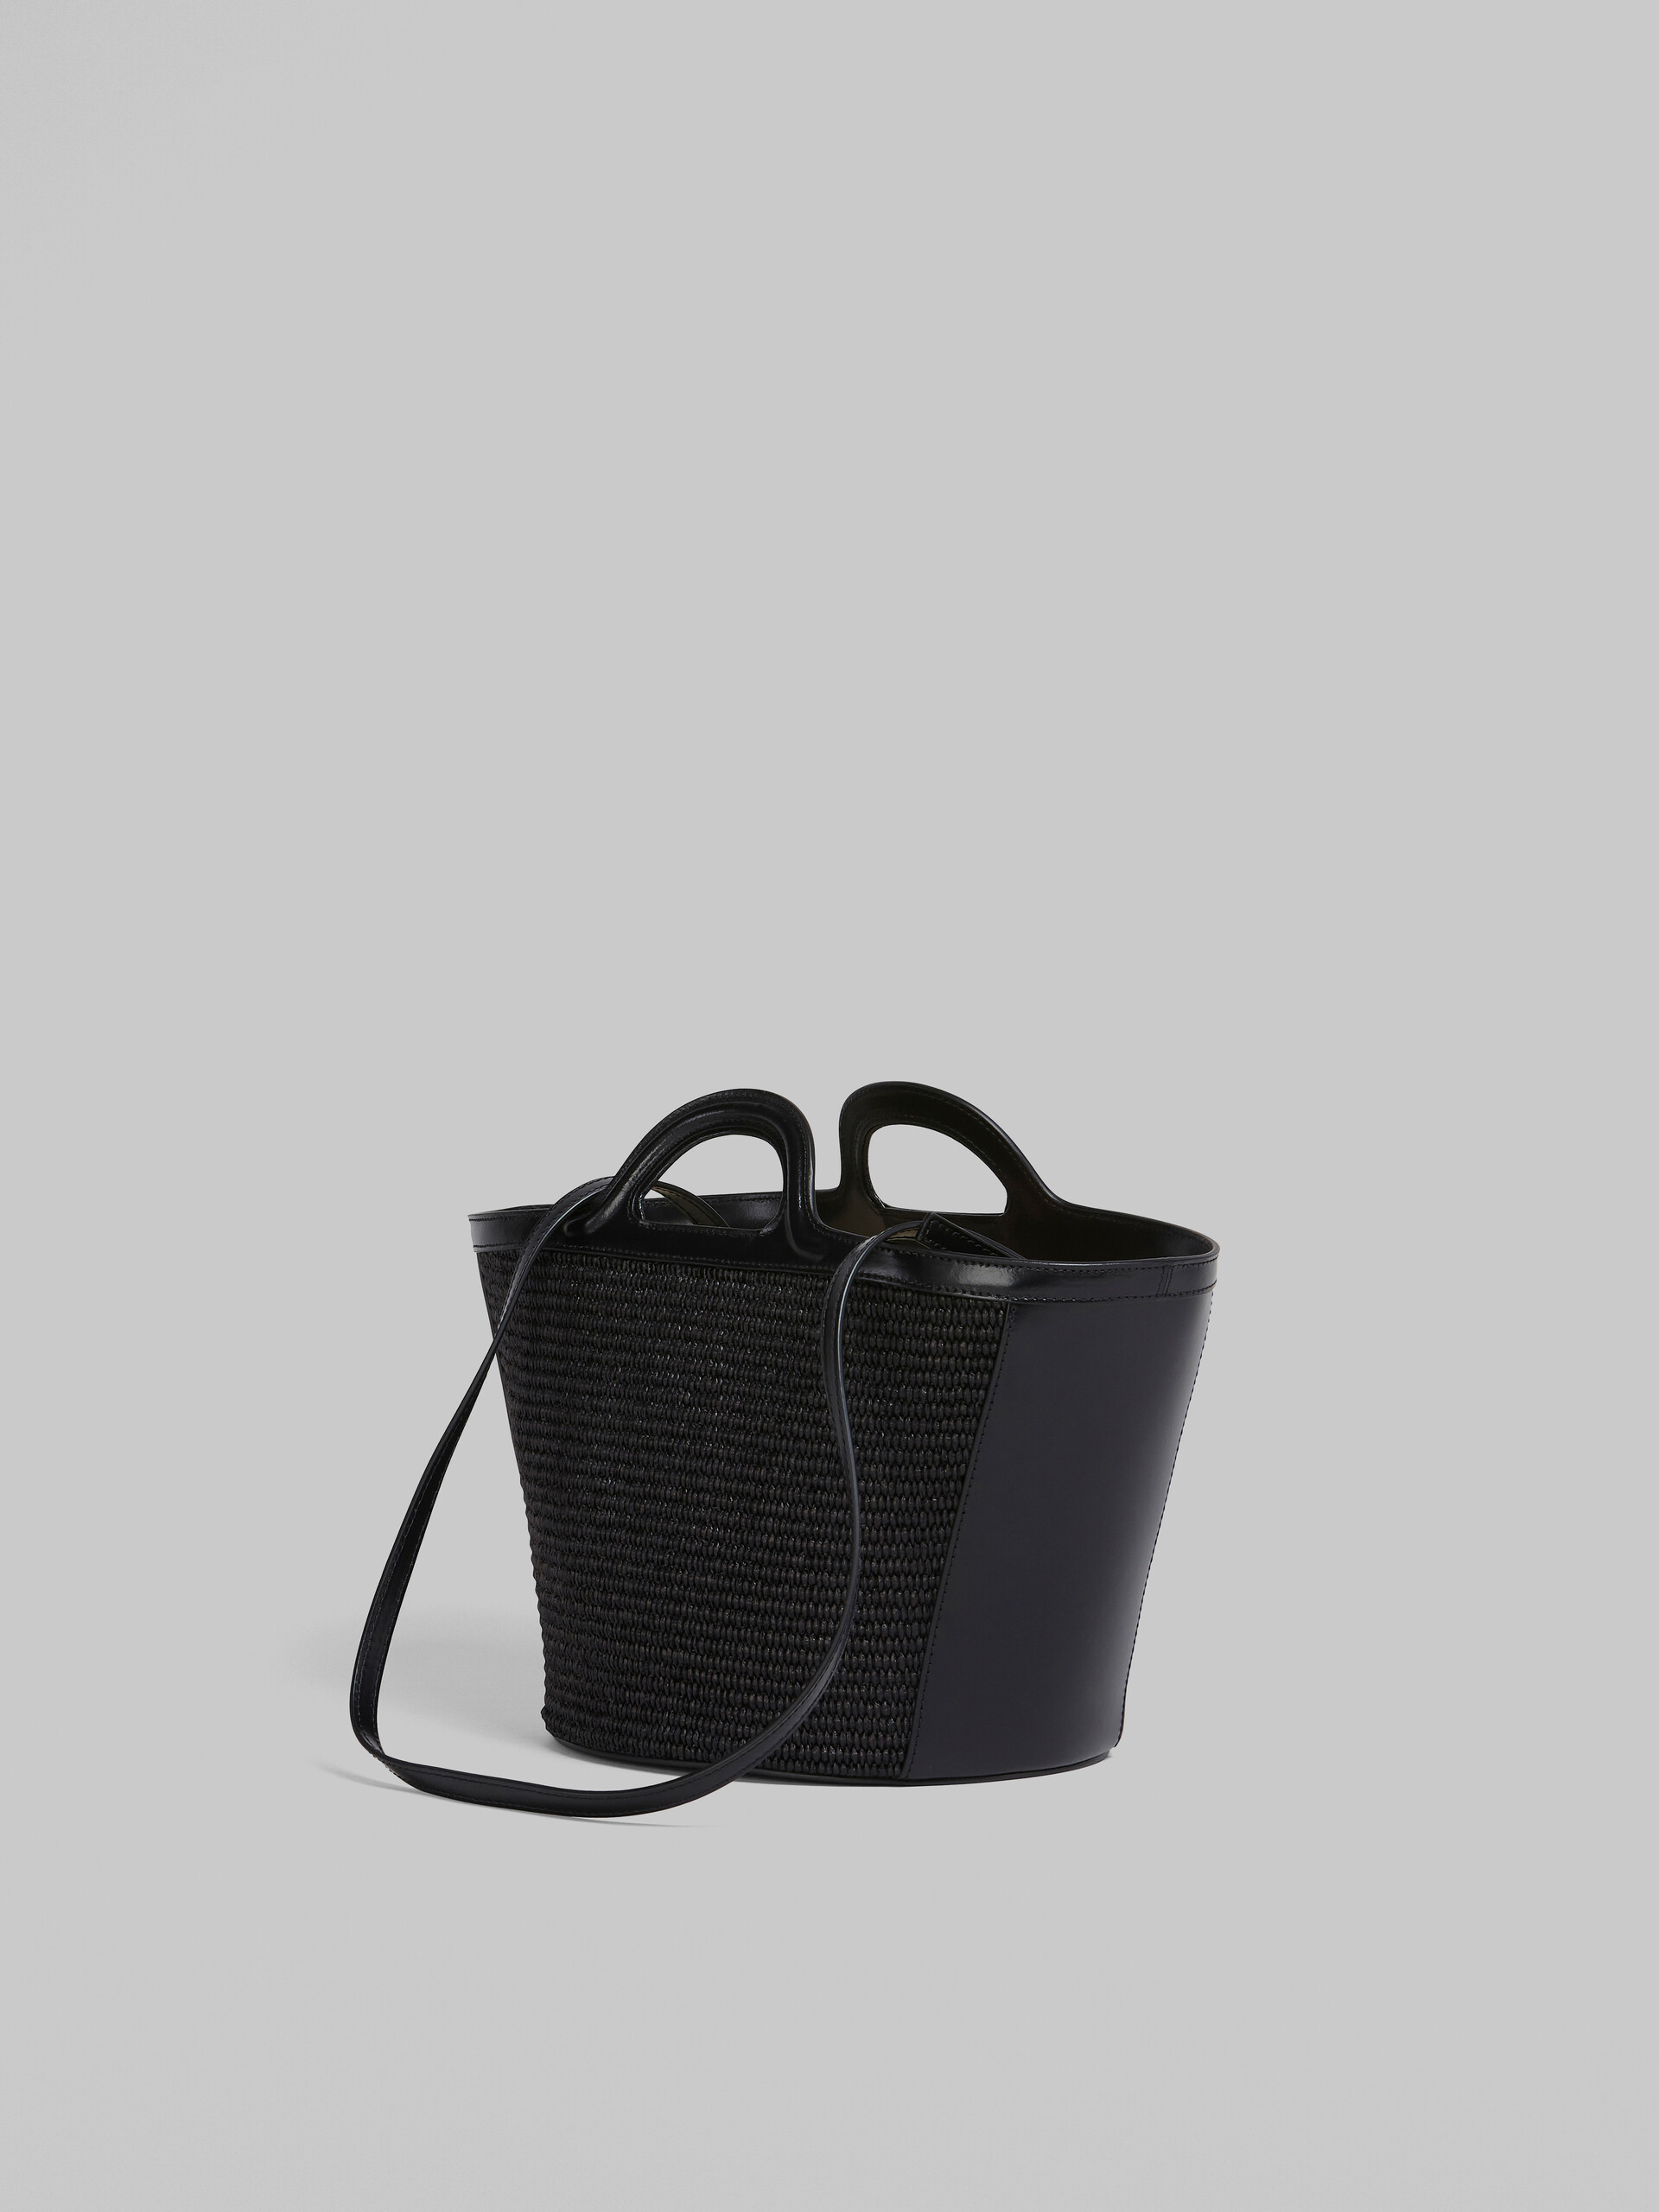 TROPICALIA small bag in black leather and raffia - Handbag - Image 3